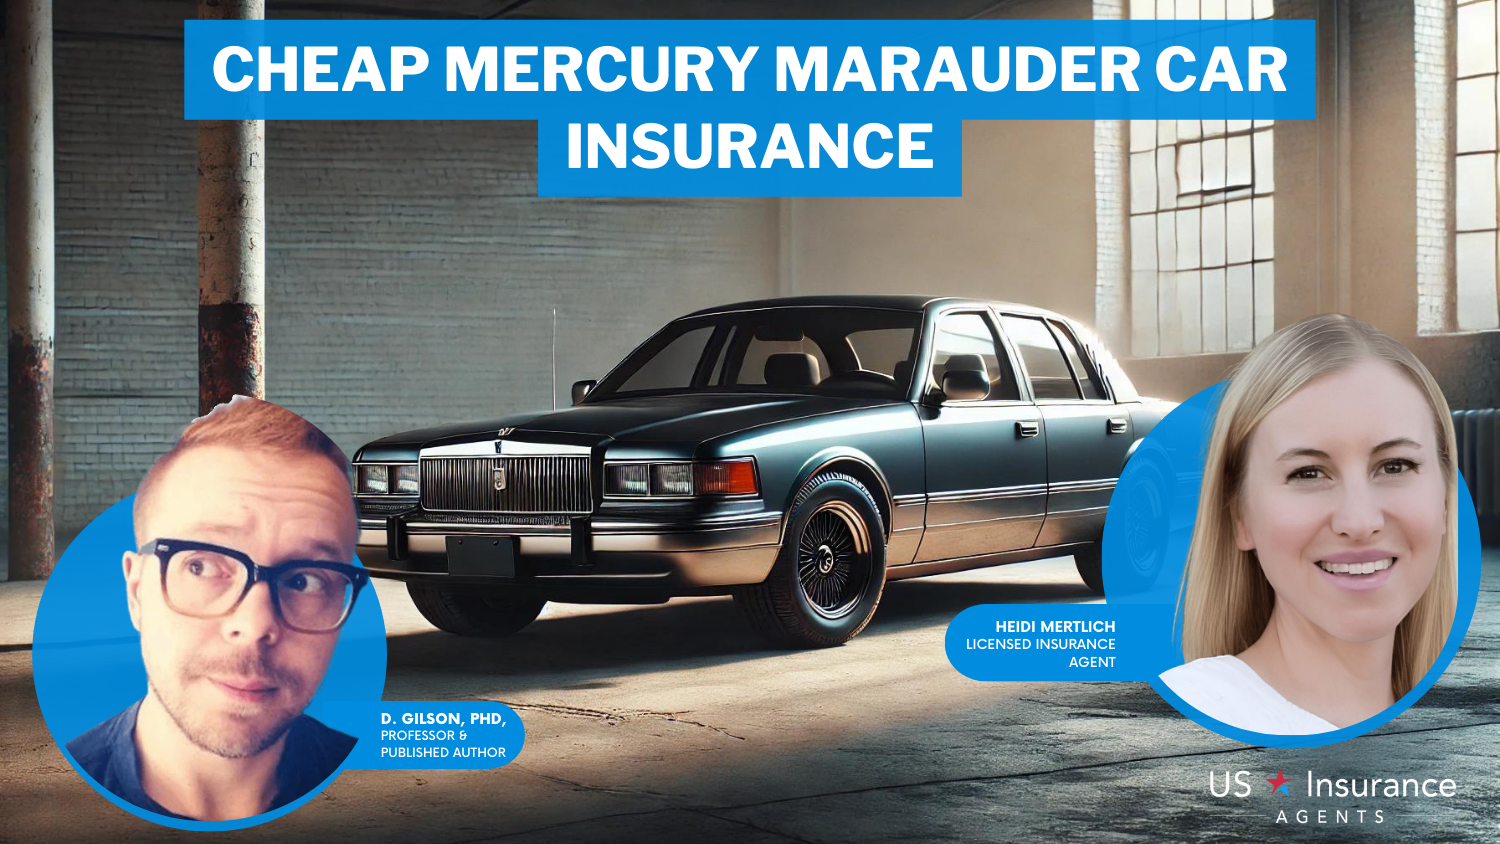 Cheap Mercury Marauder Car Insurance: Erie, Safeco, and Travelers